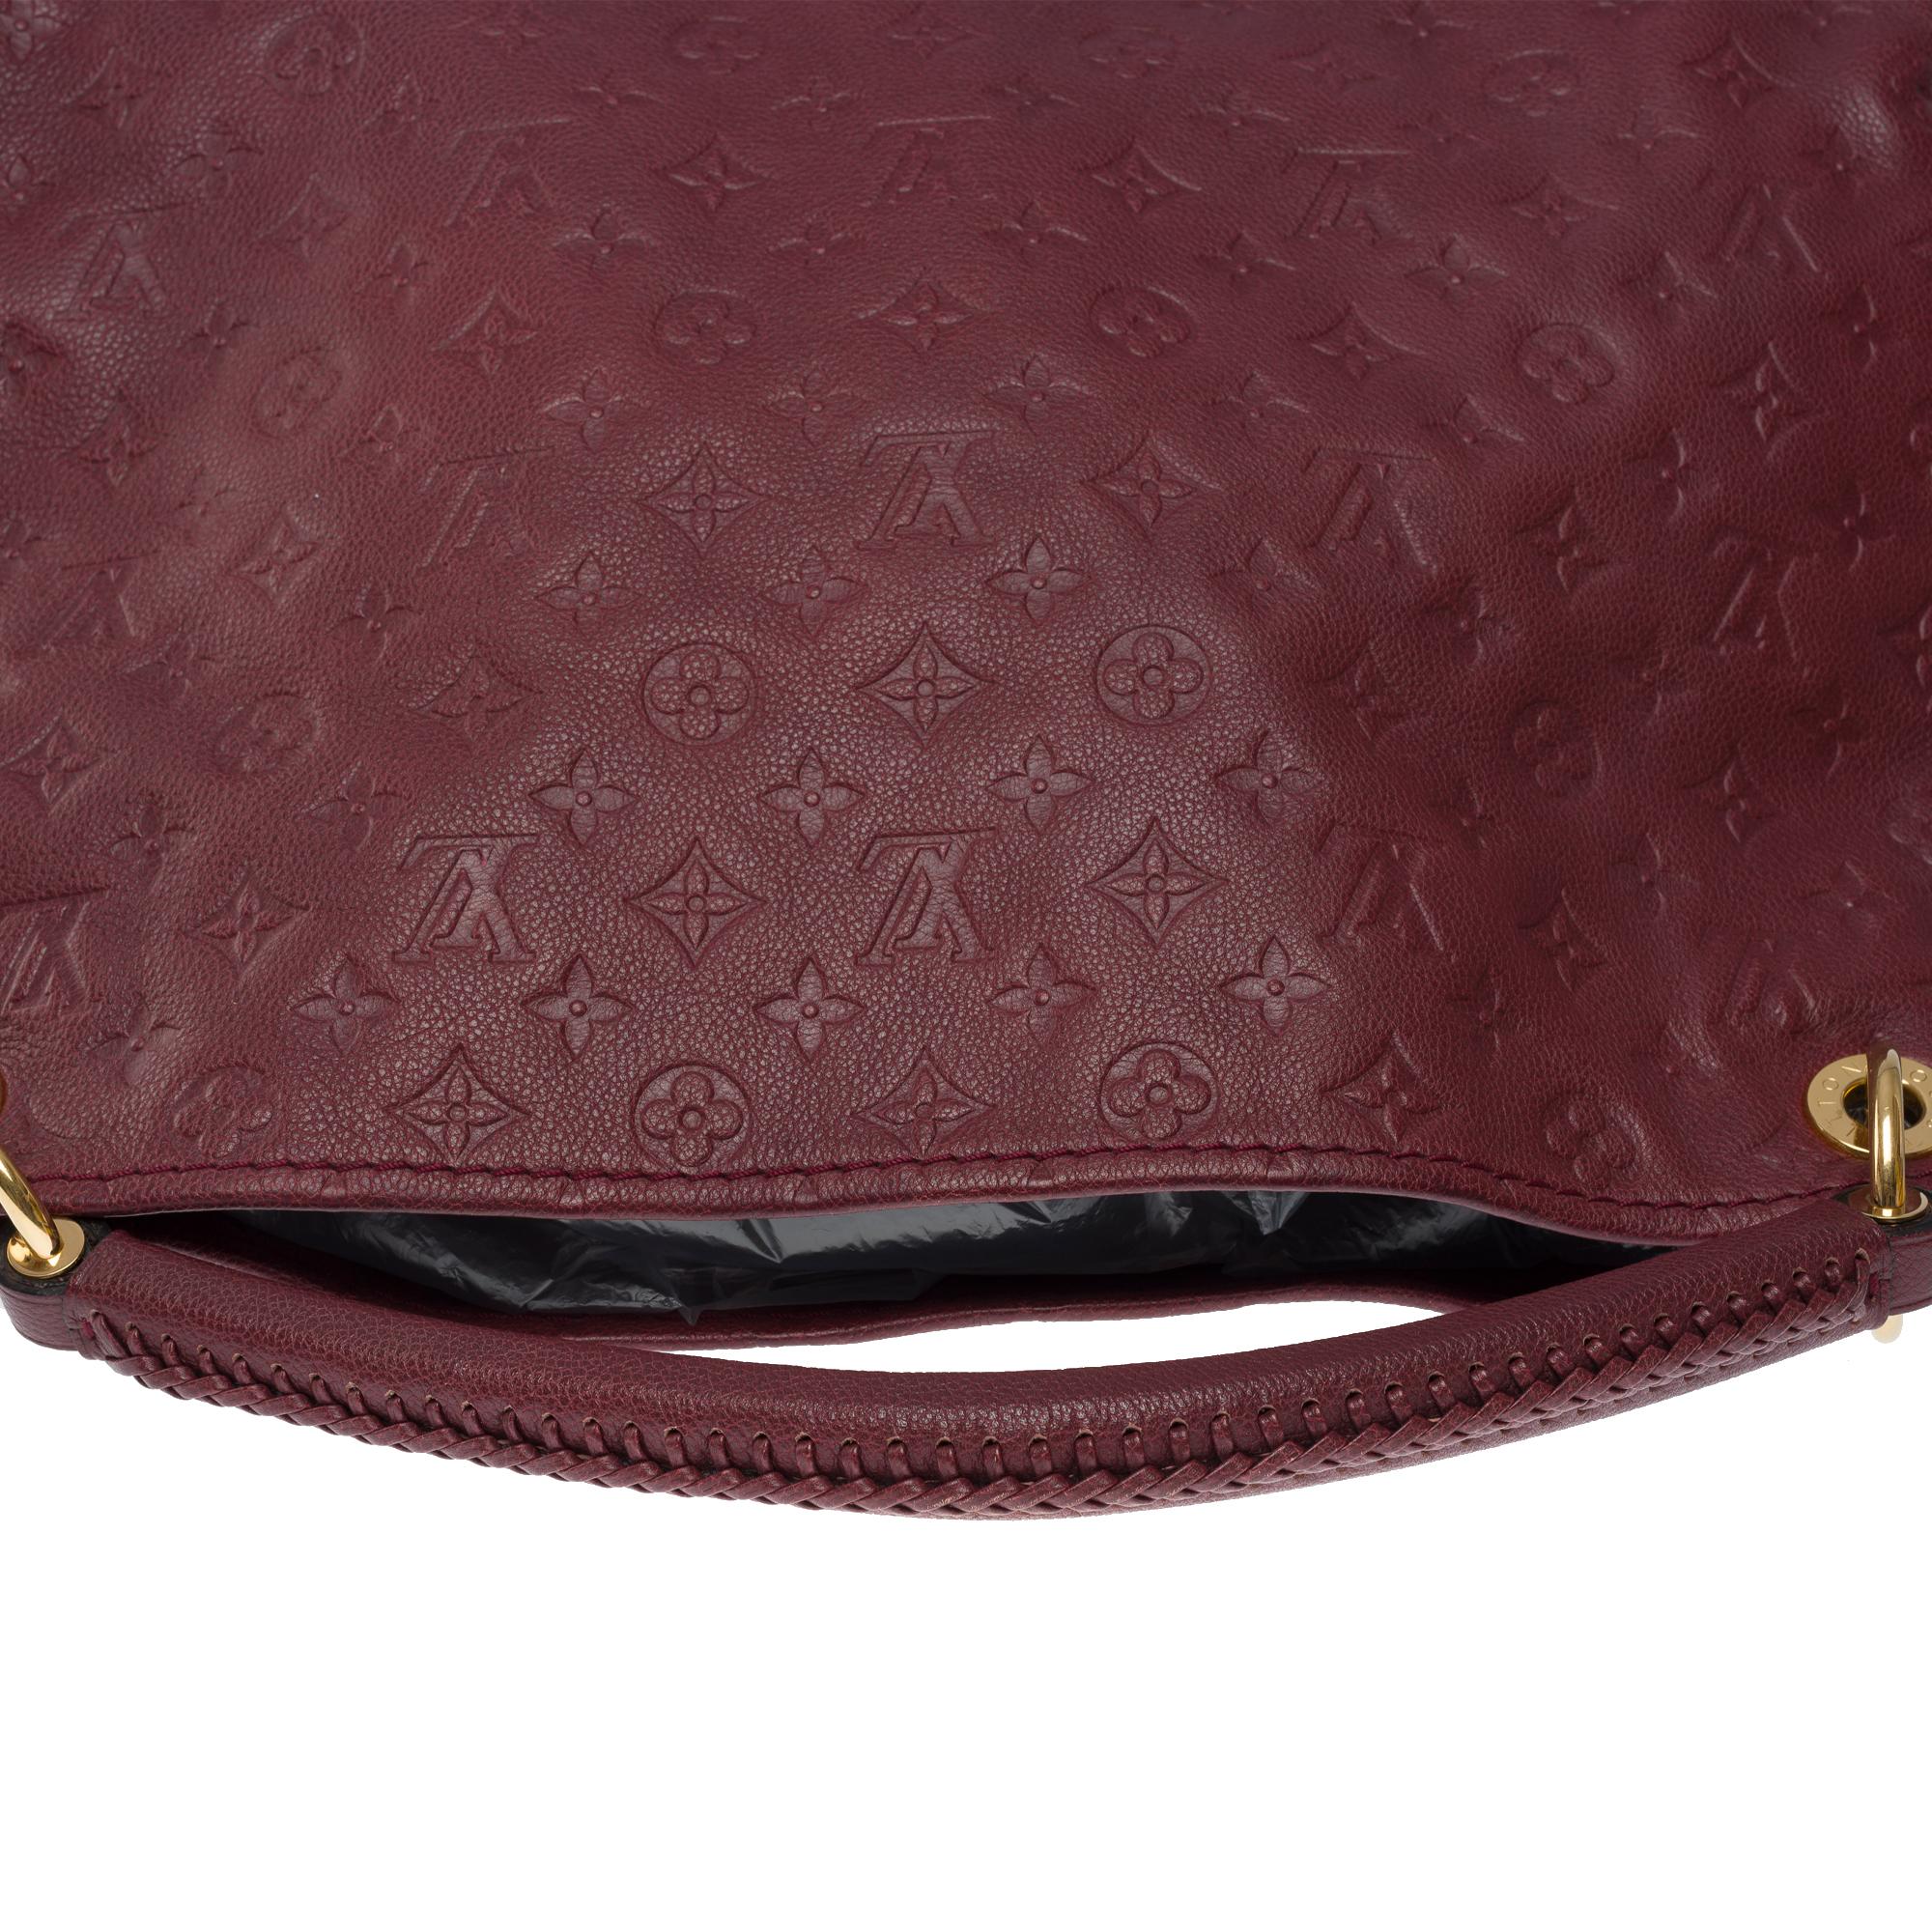 Louis Vuitton Artsy MM Hobo bag in Burgundy Monogram calfskin leather, GHW For Sale 4